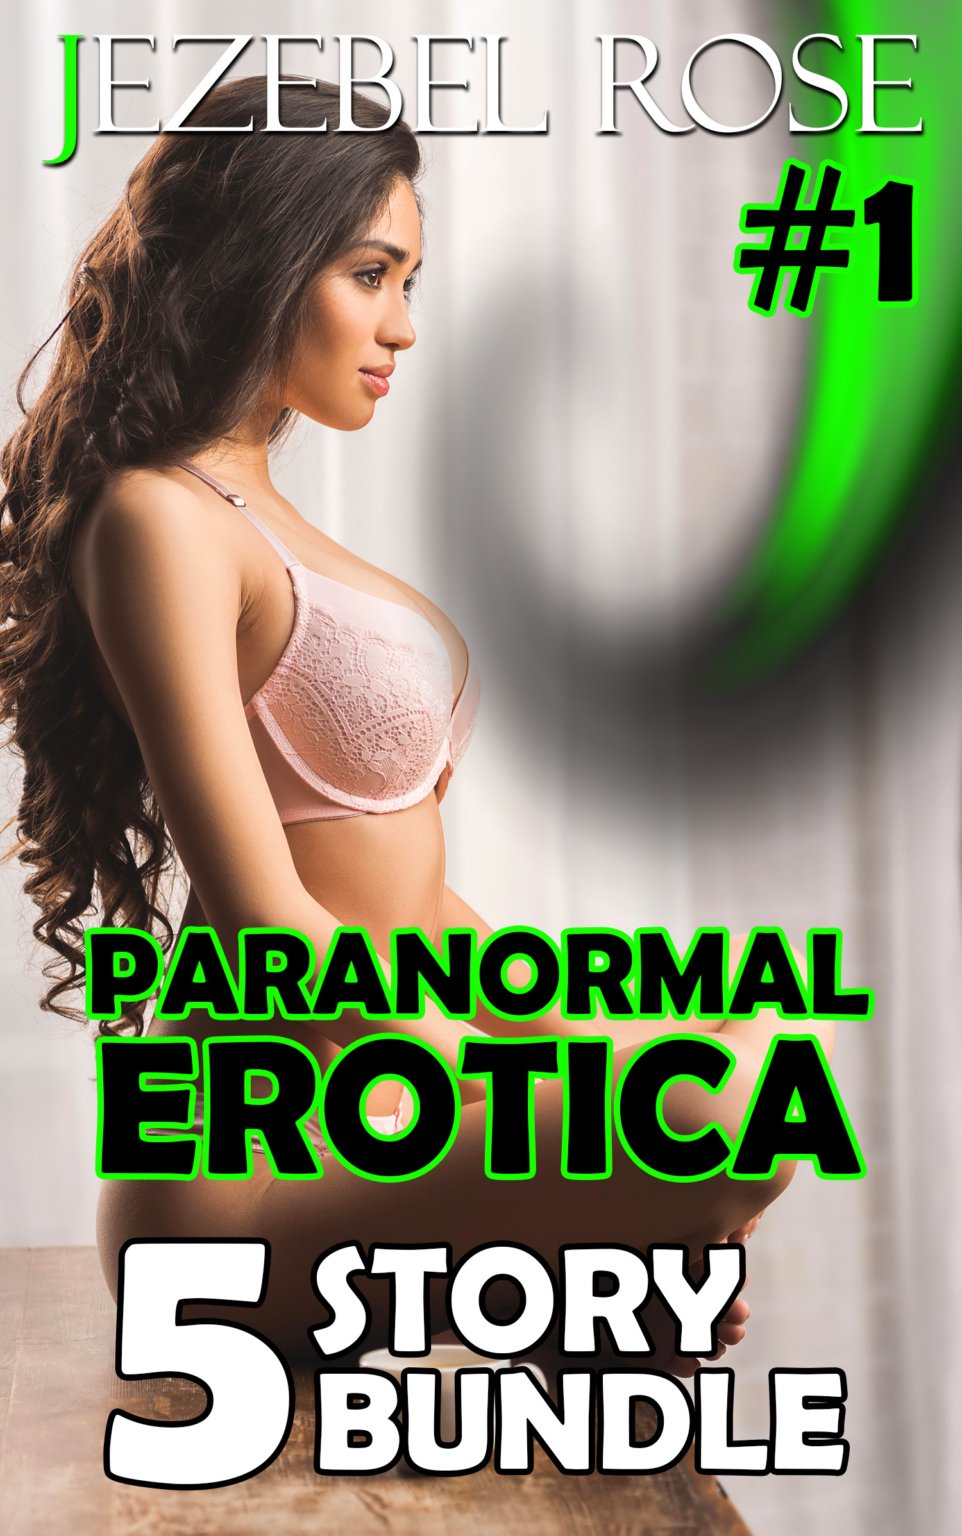 Paranormal Erotica 5 Story Bundle Demonic Sex Feature #1